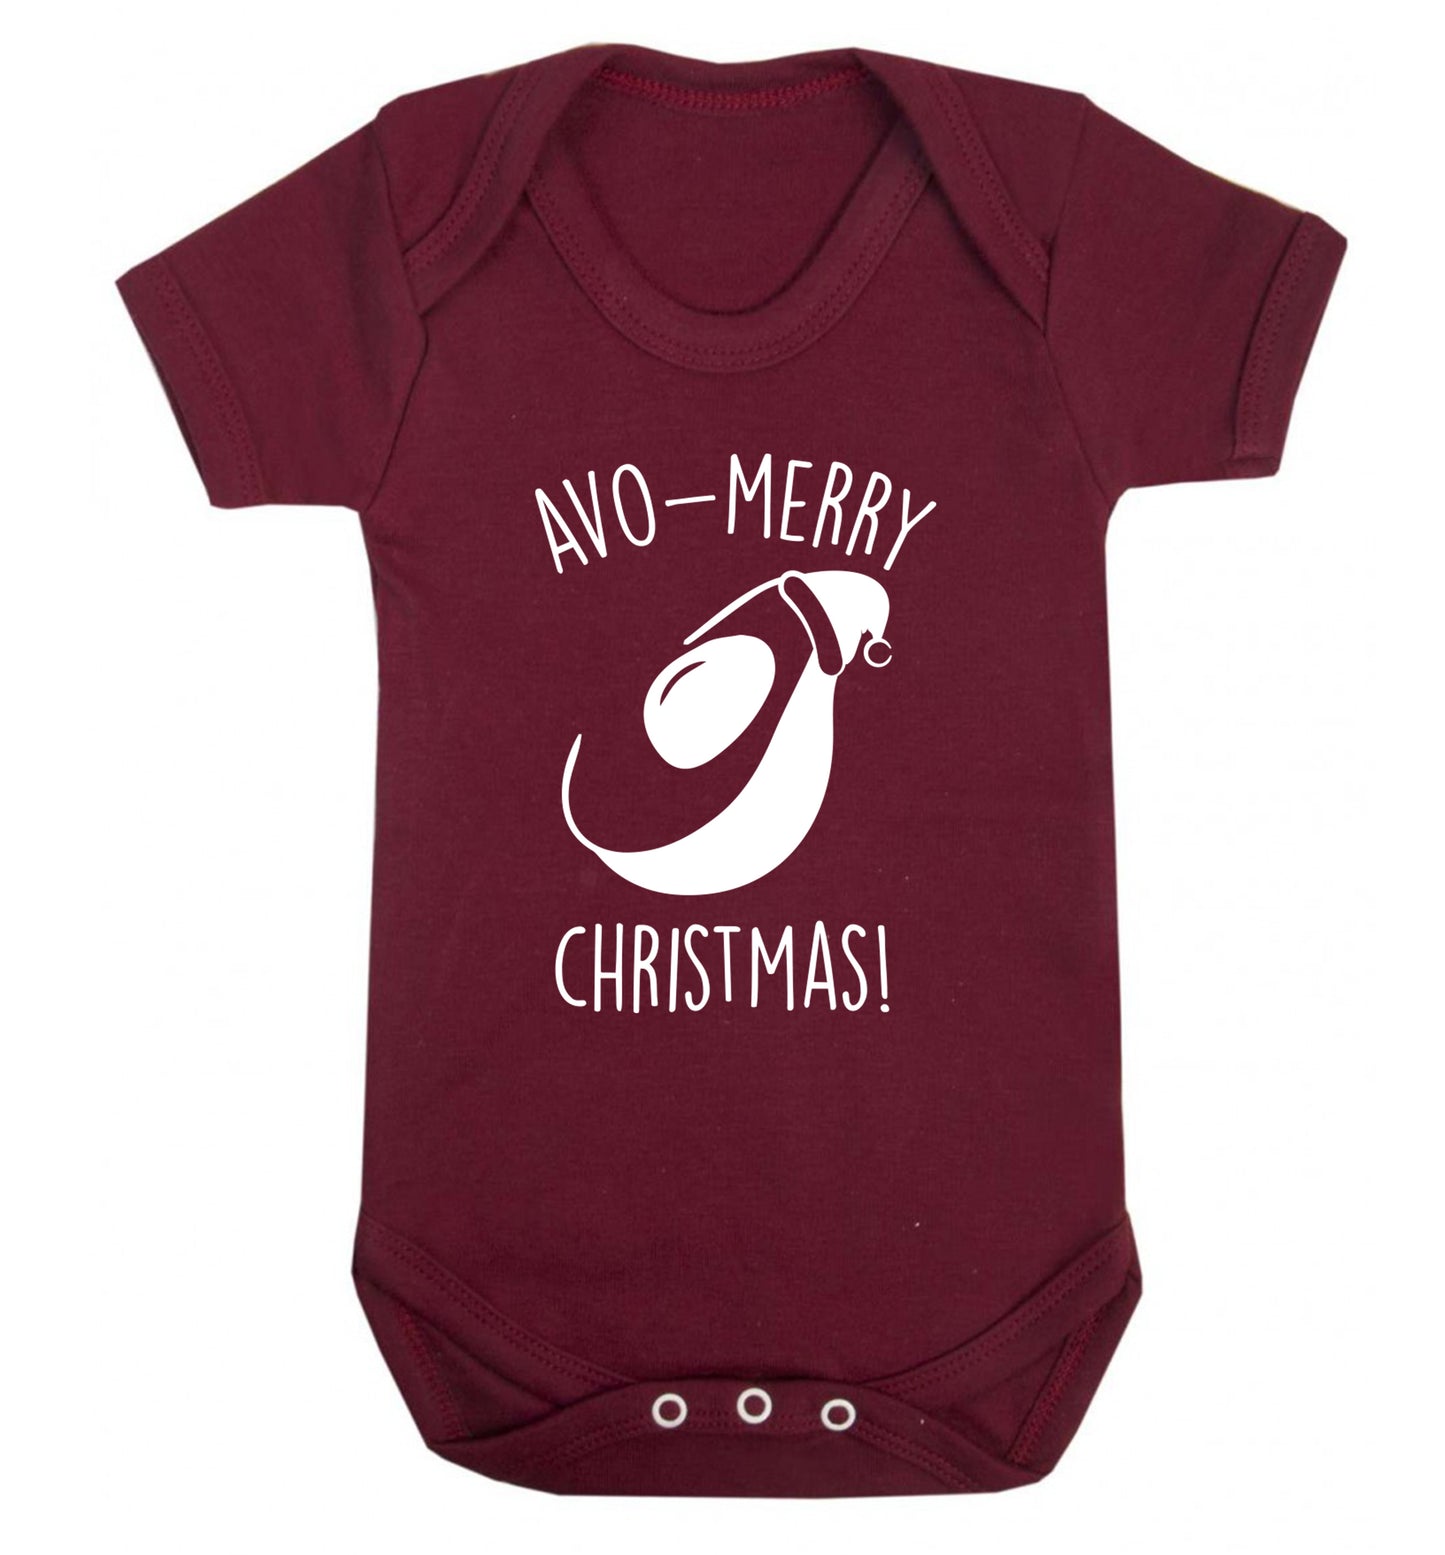 Avo-Merry Christmas Baby Vest maroon 18-24 months